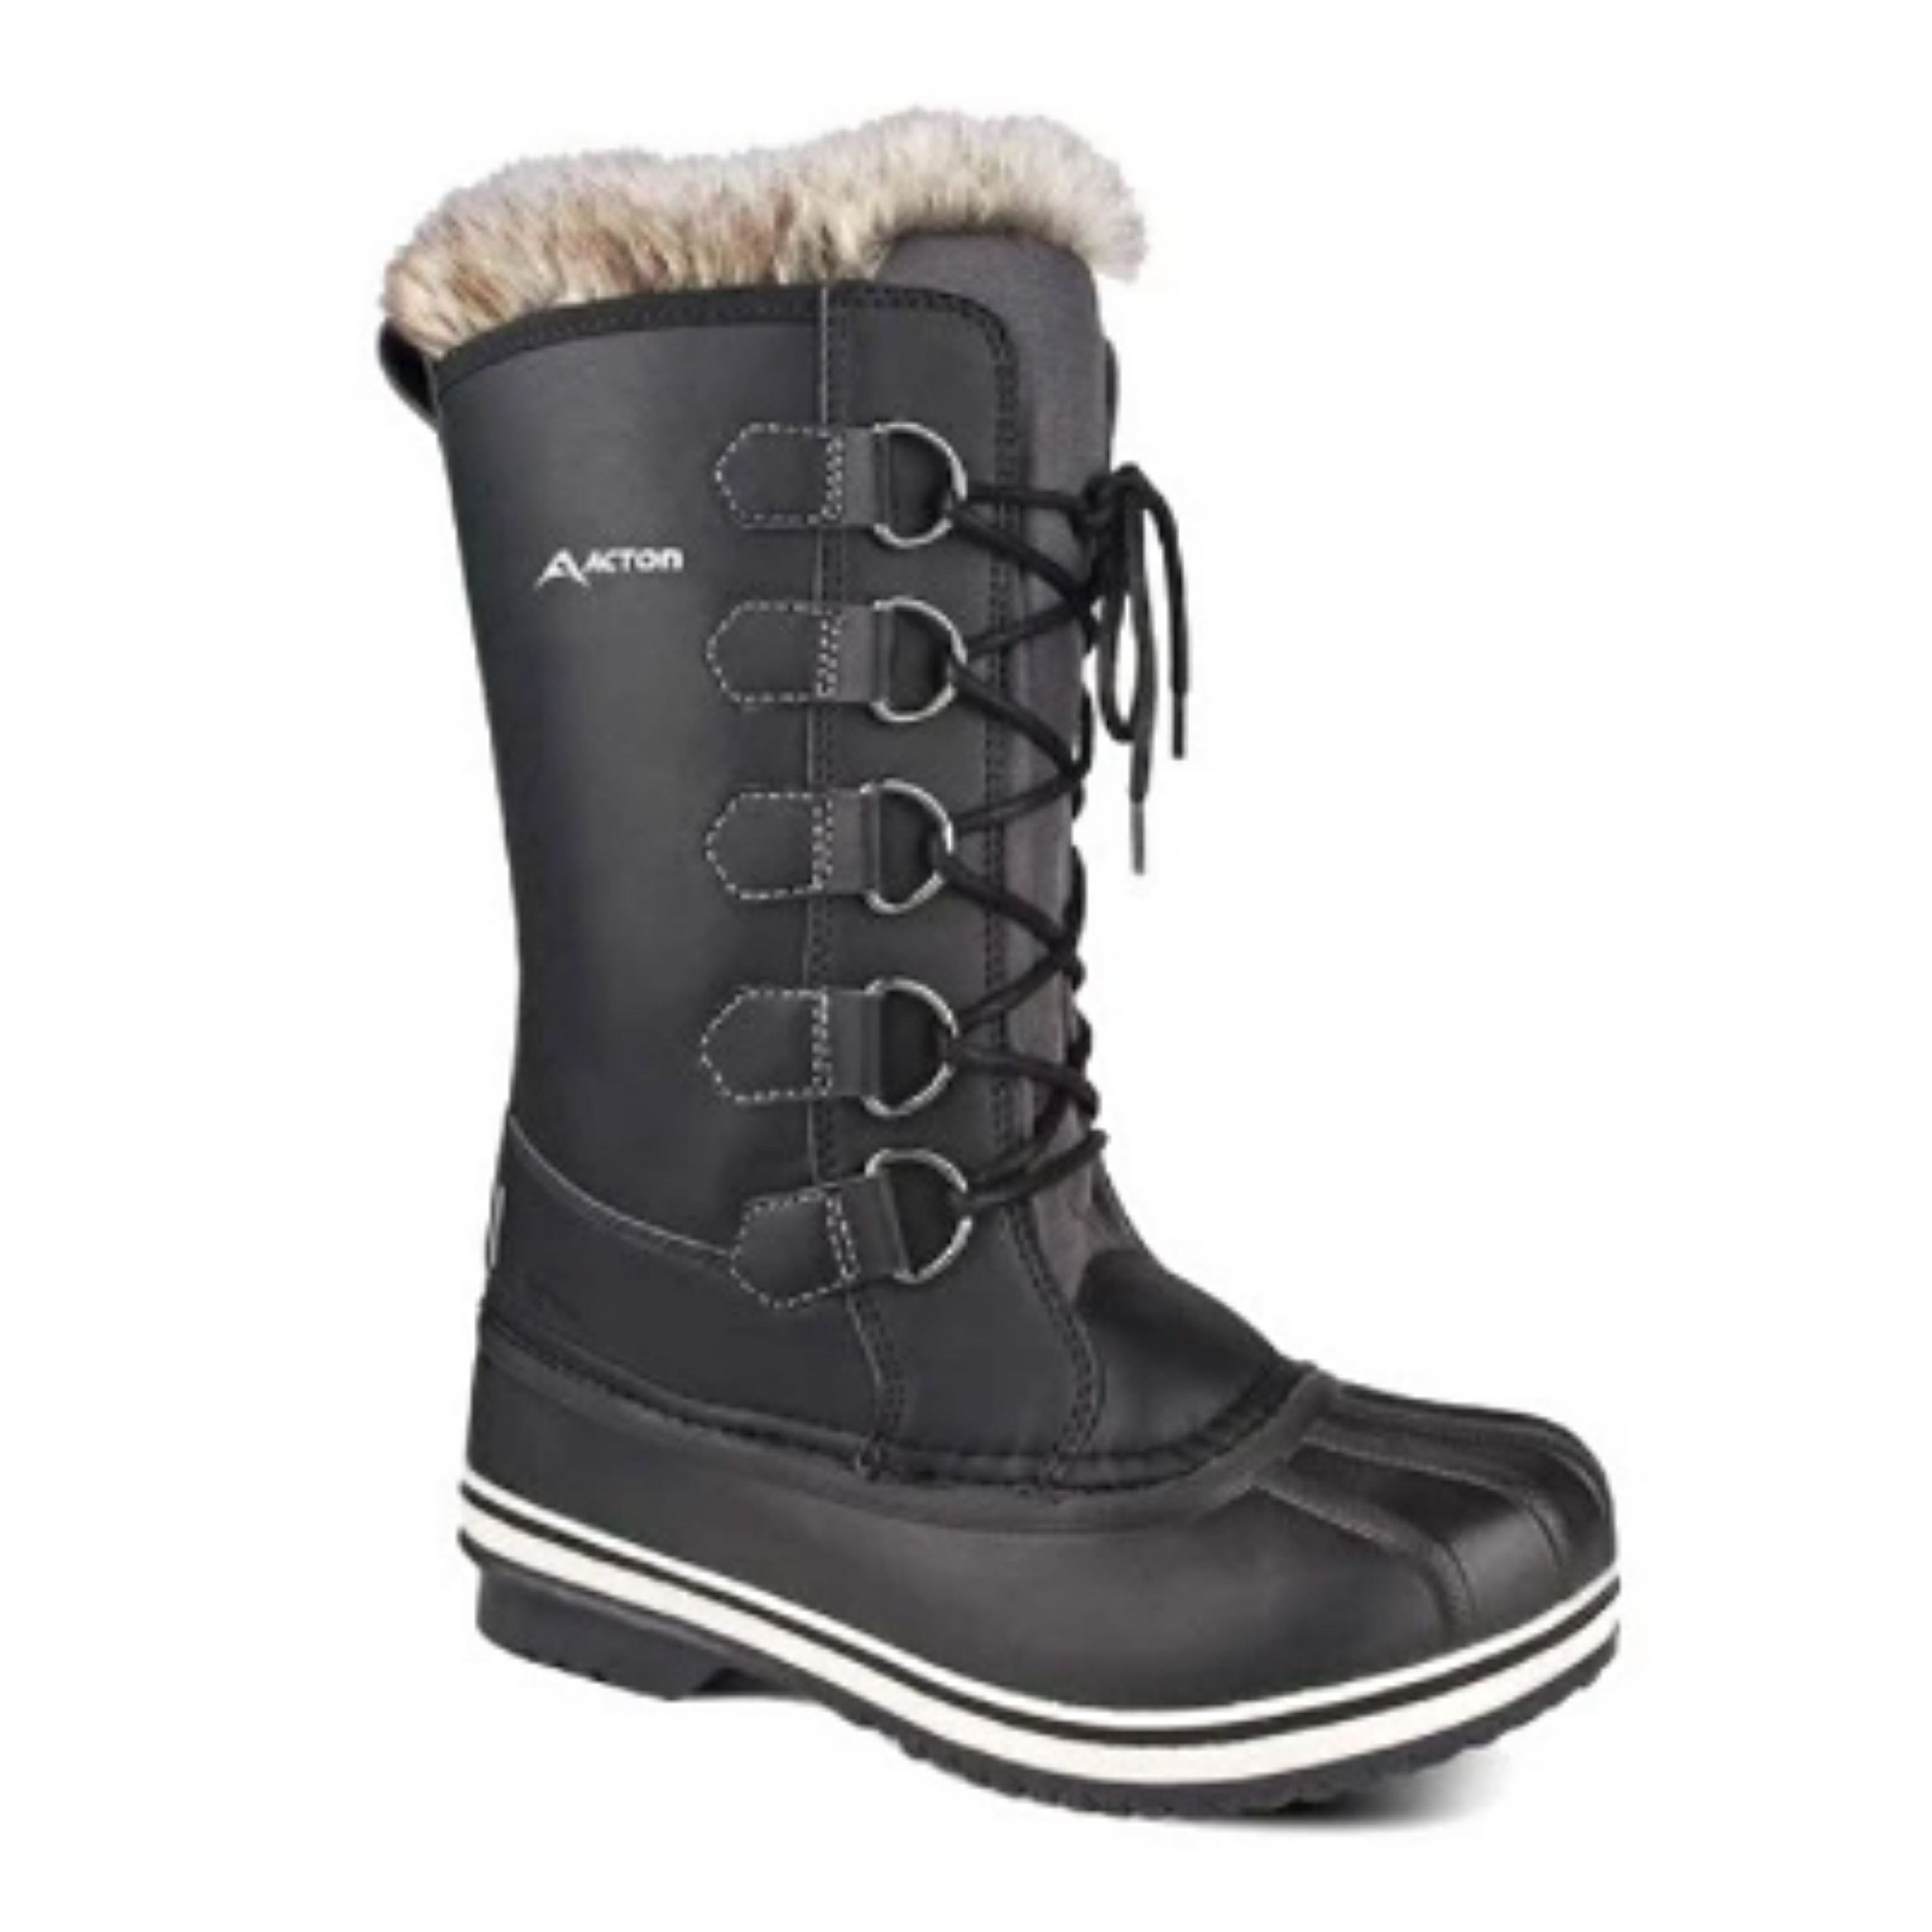 "Corinne" Winter boots - Women’s